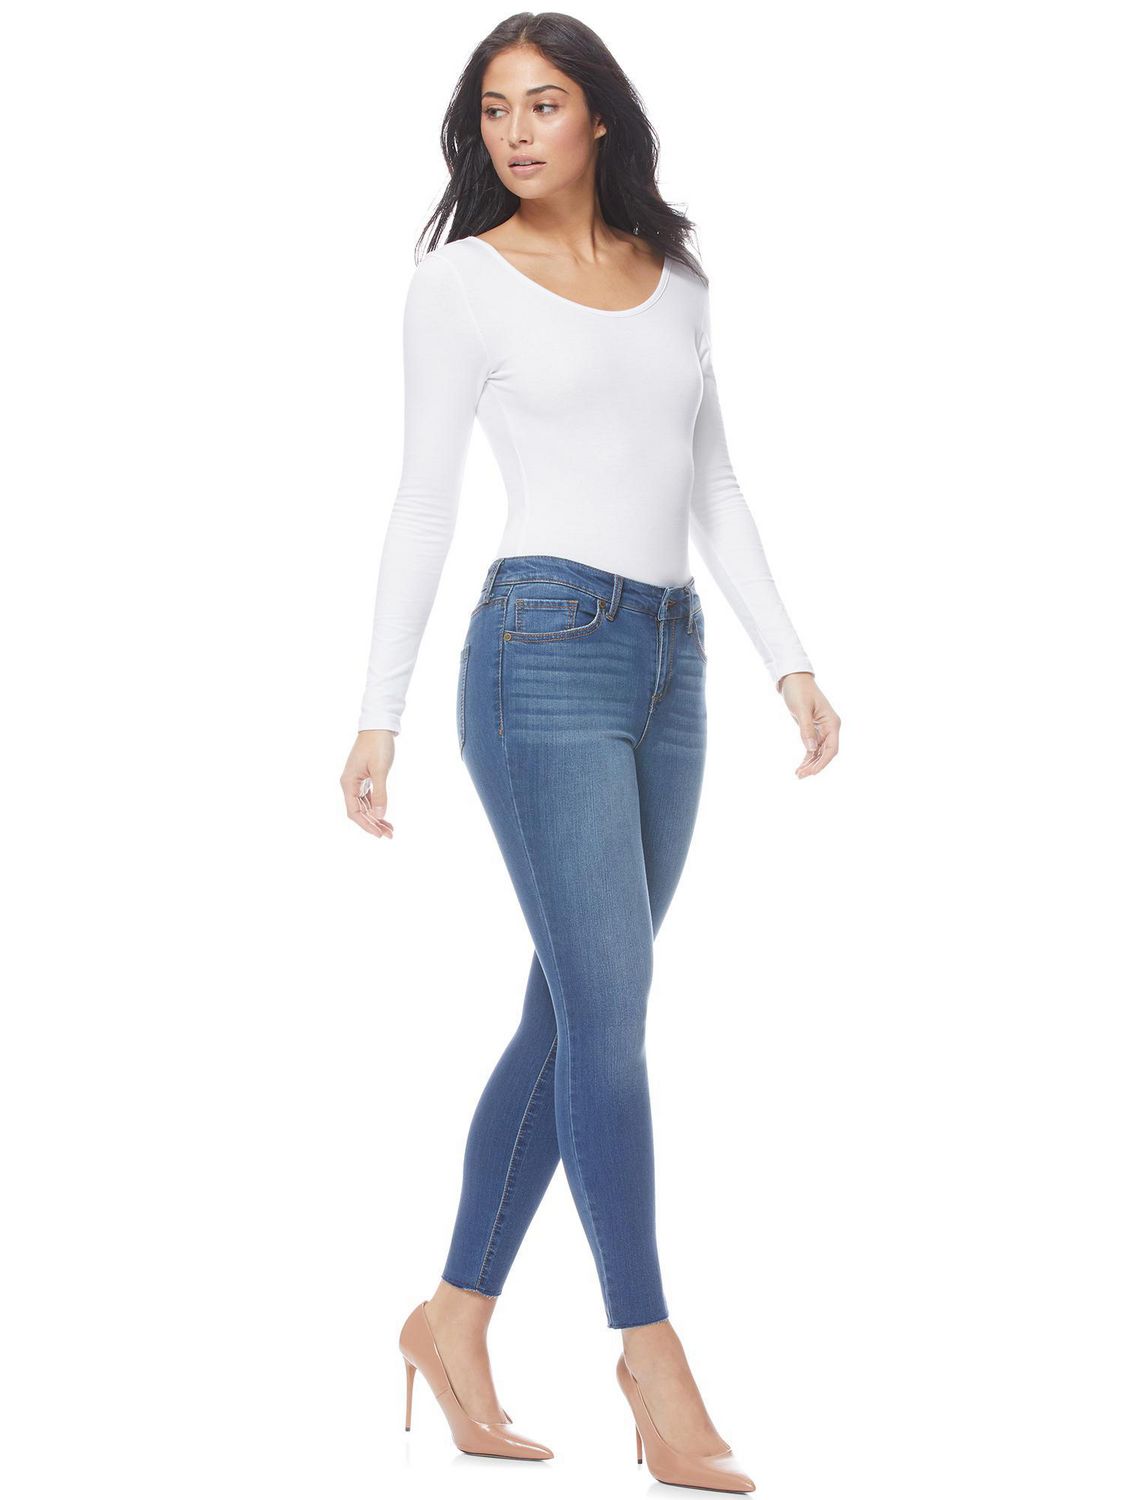 PS553-05-20 Women Plus Size Capri Jeans - Dark Blue Mark - Size 20